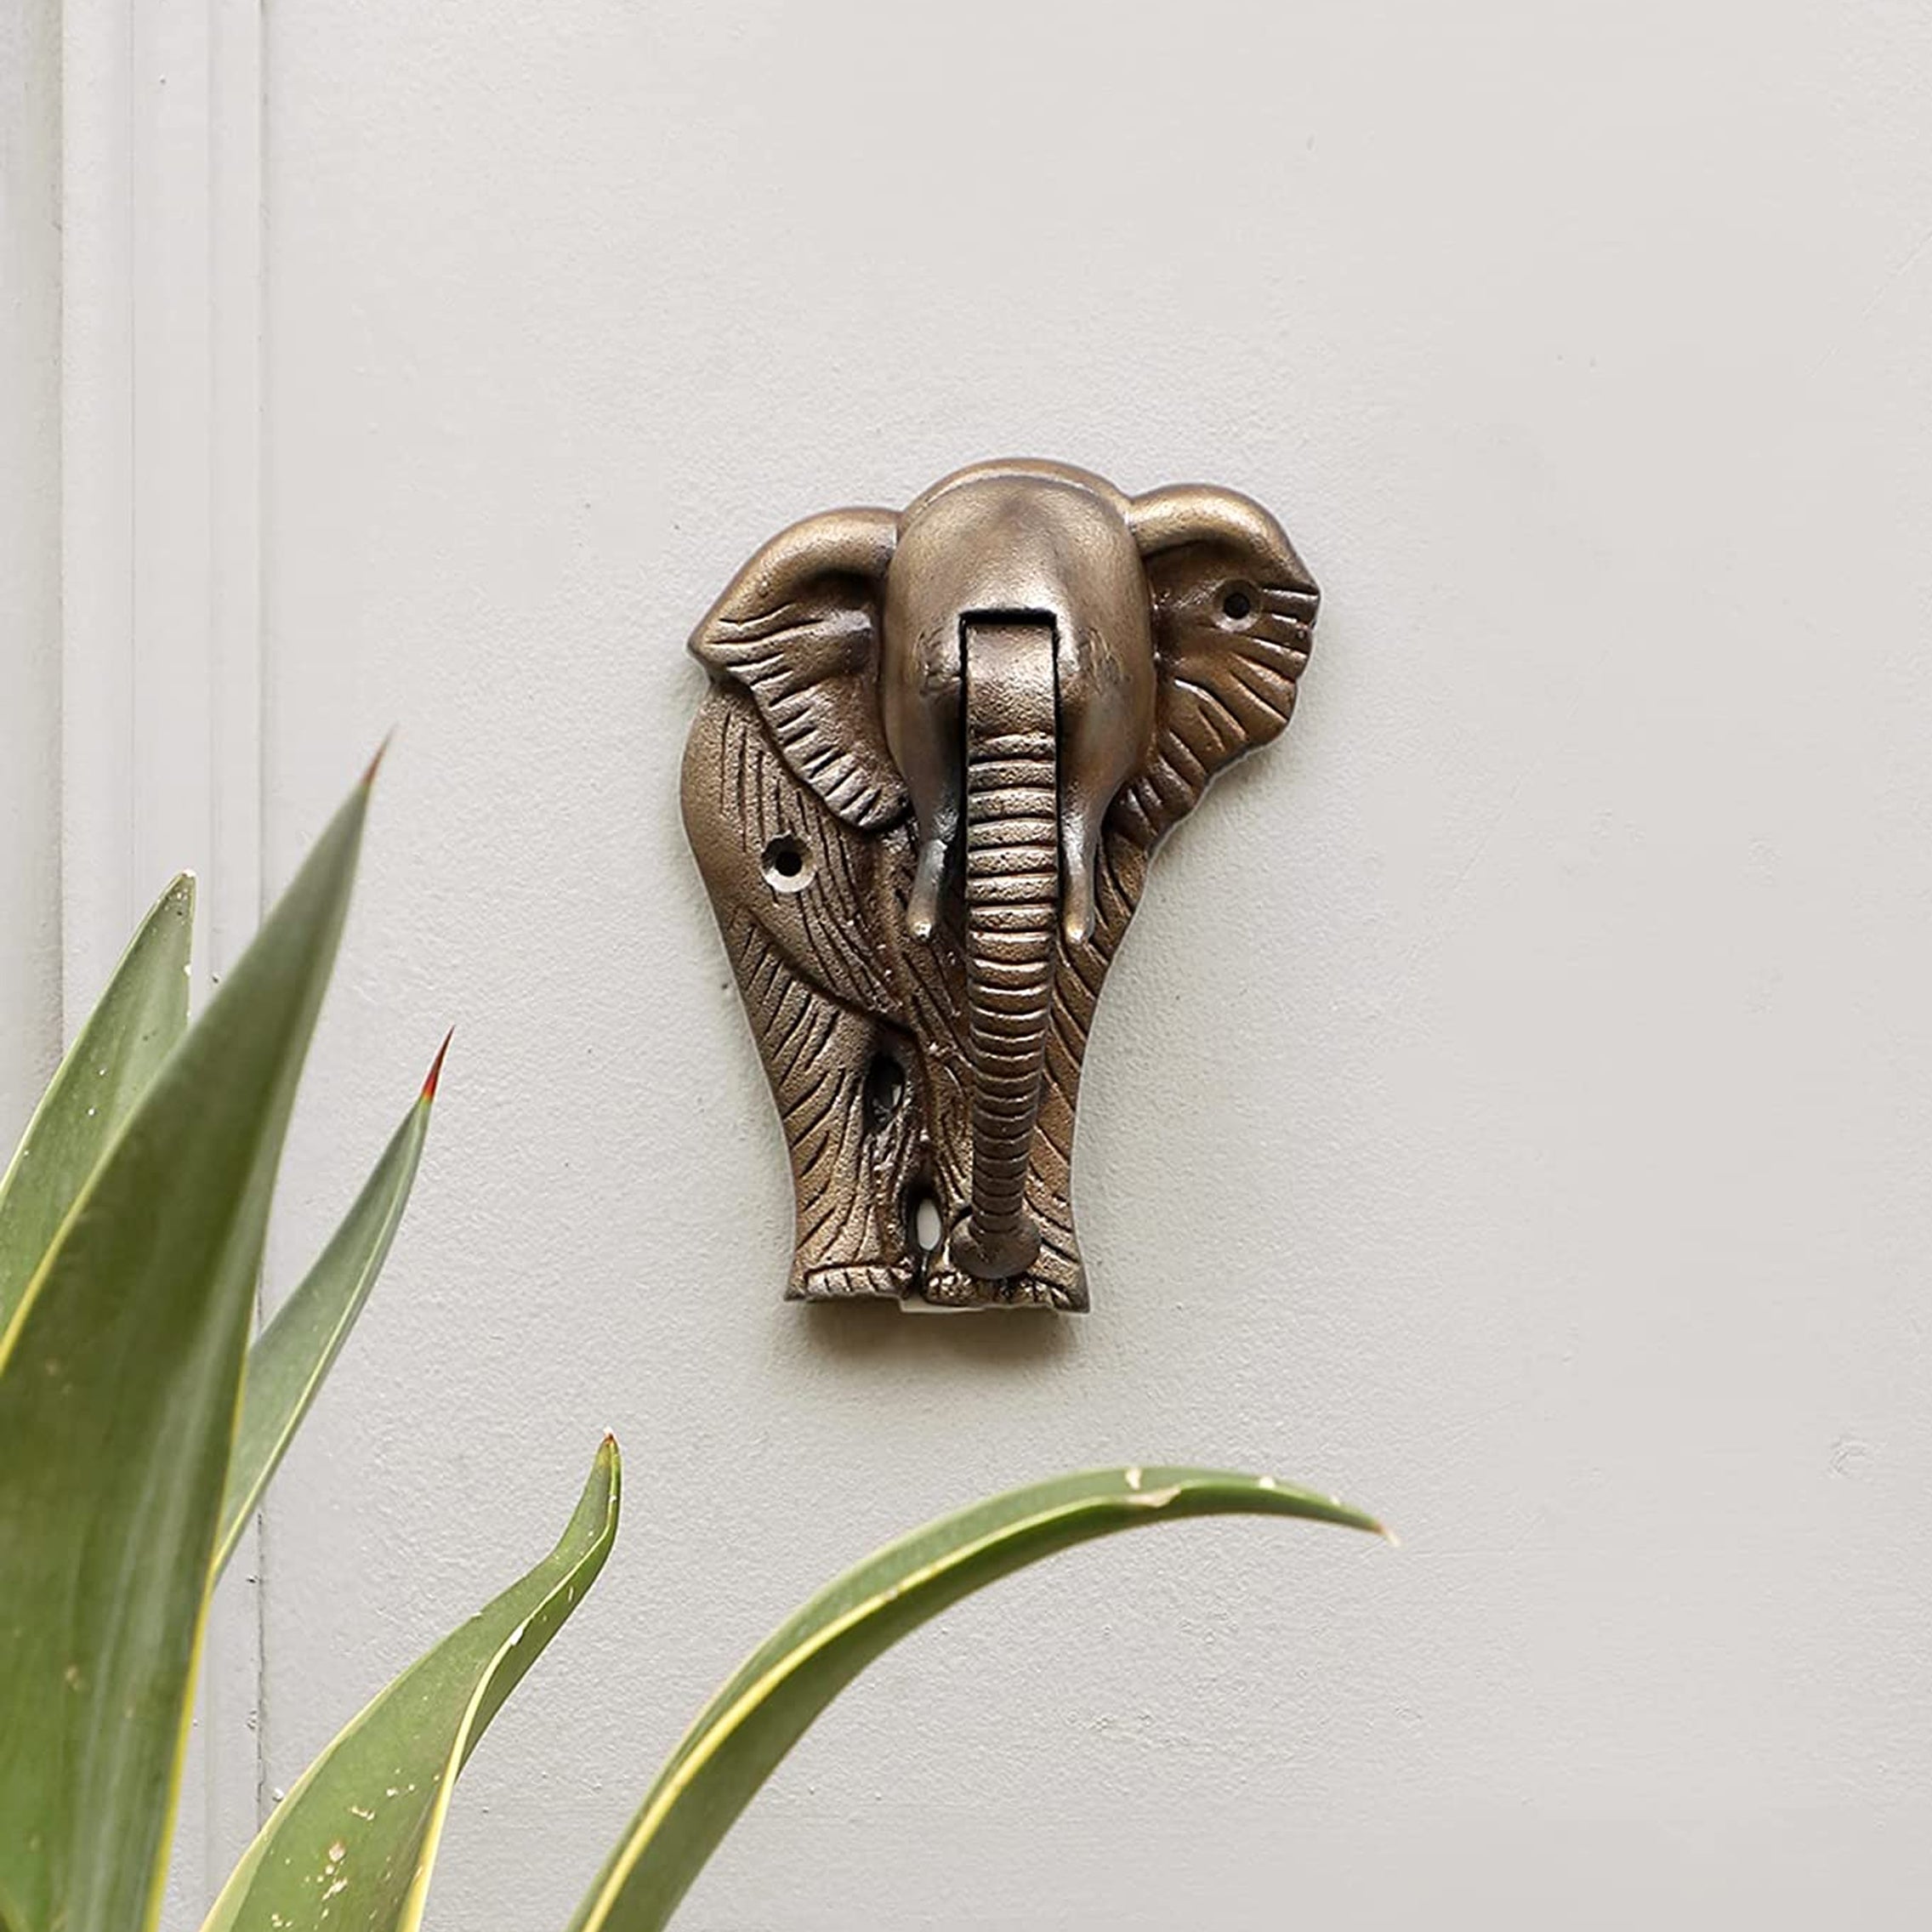 Elephant Design Cast Iron Door Knocker, Antique Brass Finished